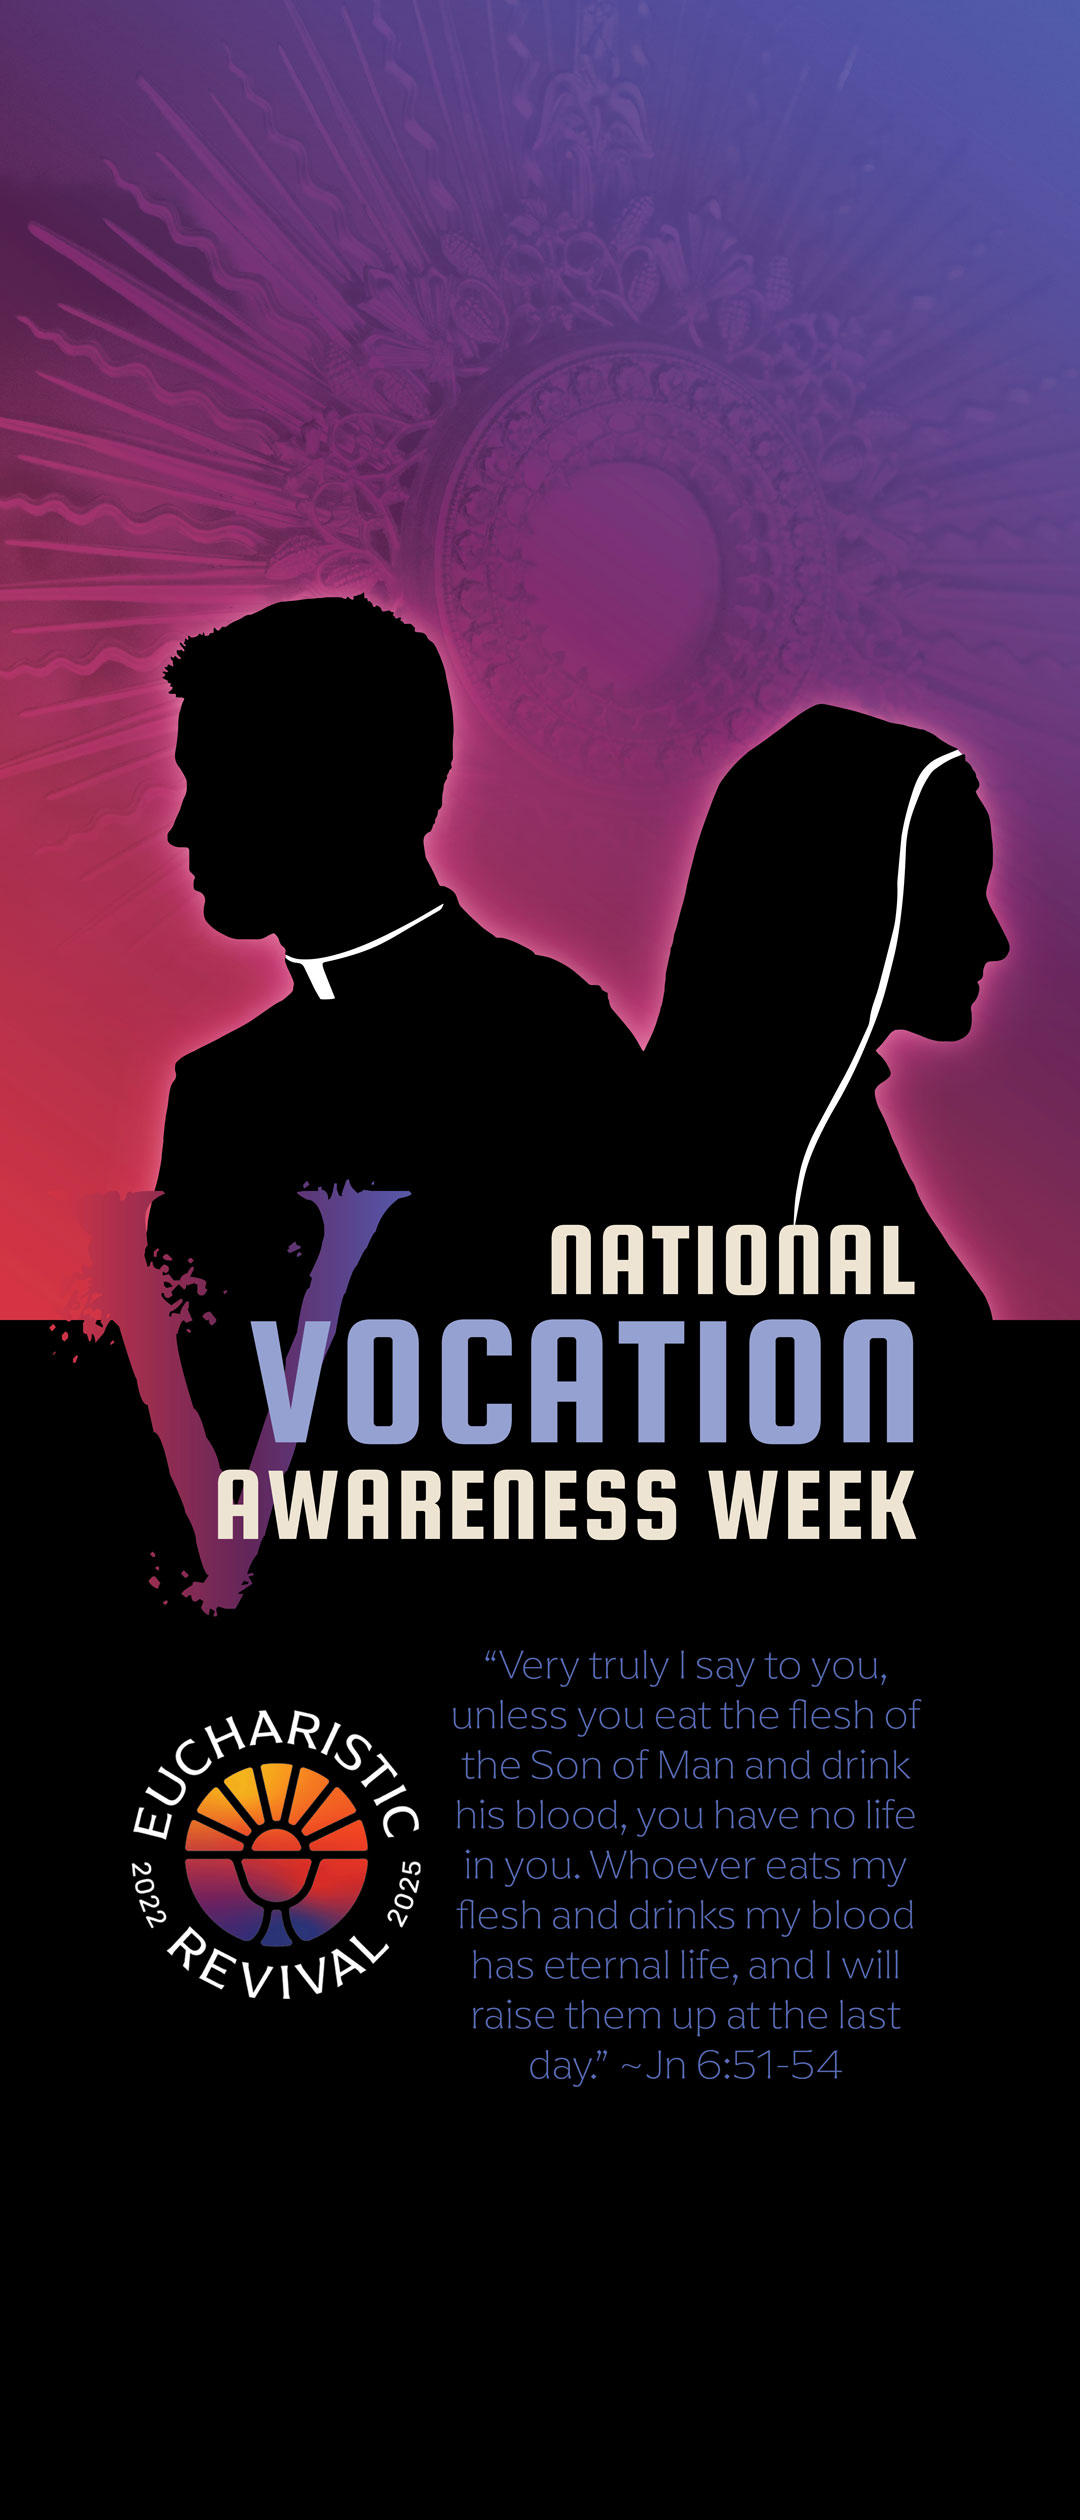 Vocation Awareness Week Banner w/ Eucharistic Revival theme Vianney